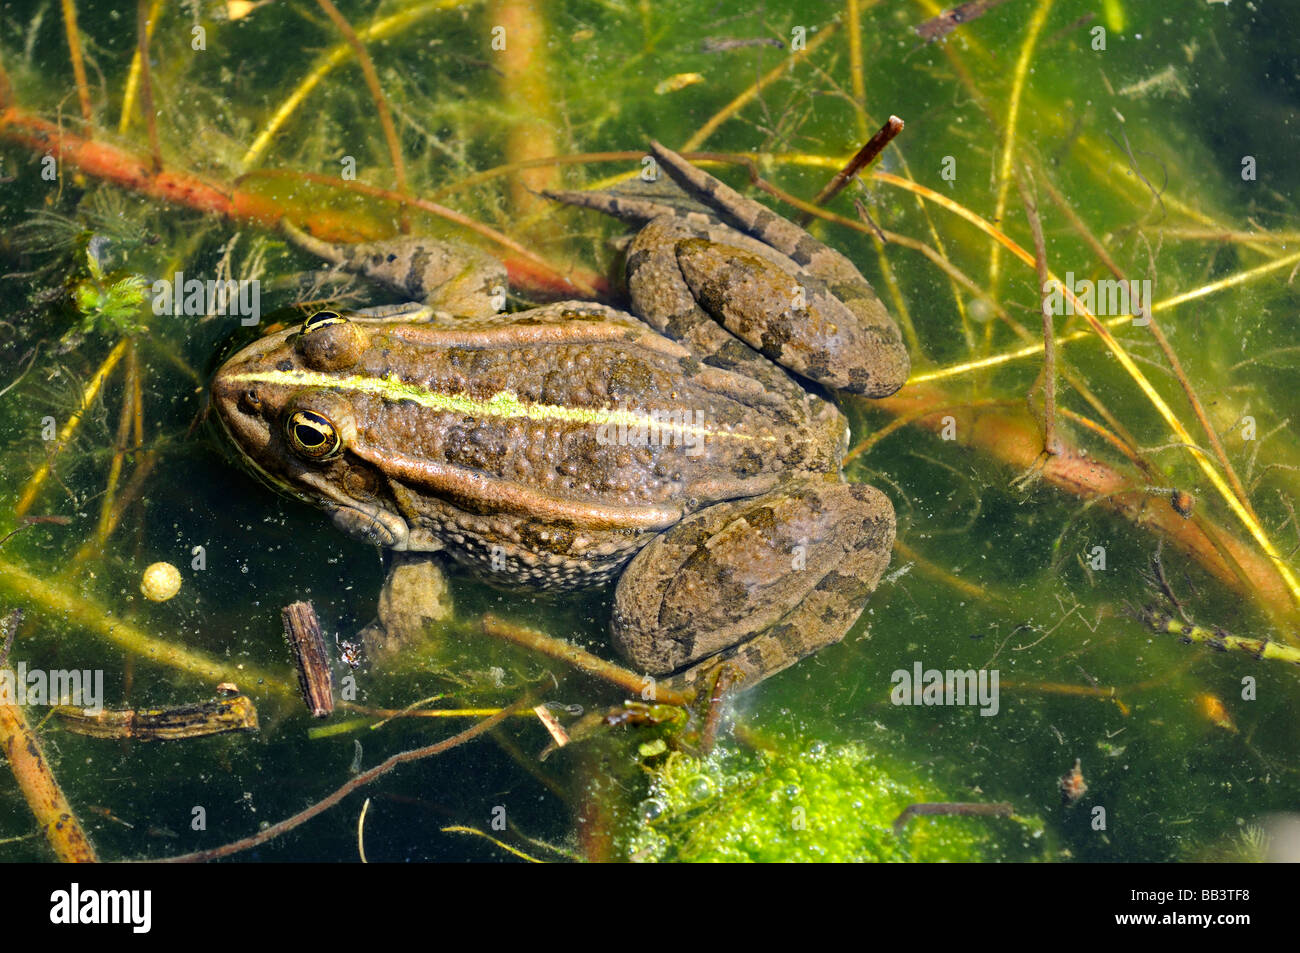 Edible frog, Water frog, Rana kl esculenta Stock Photo